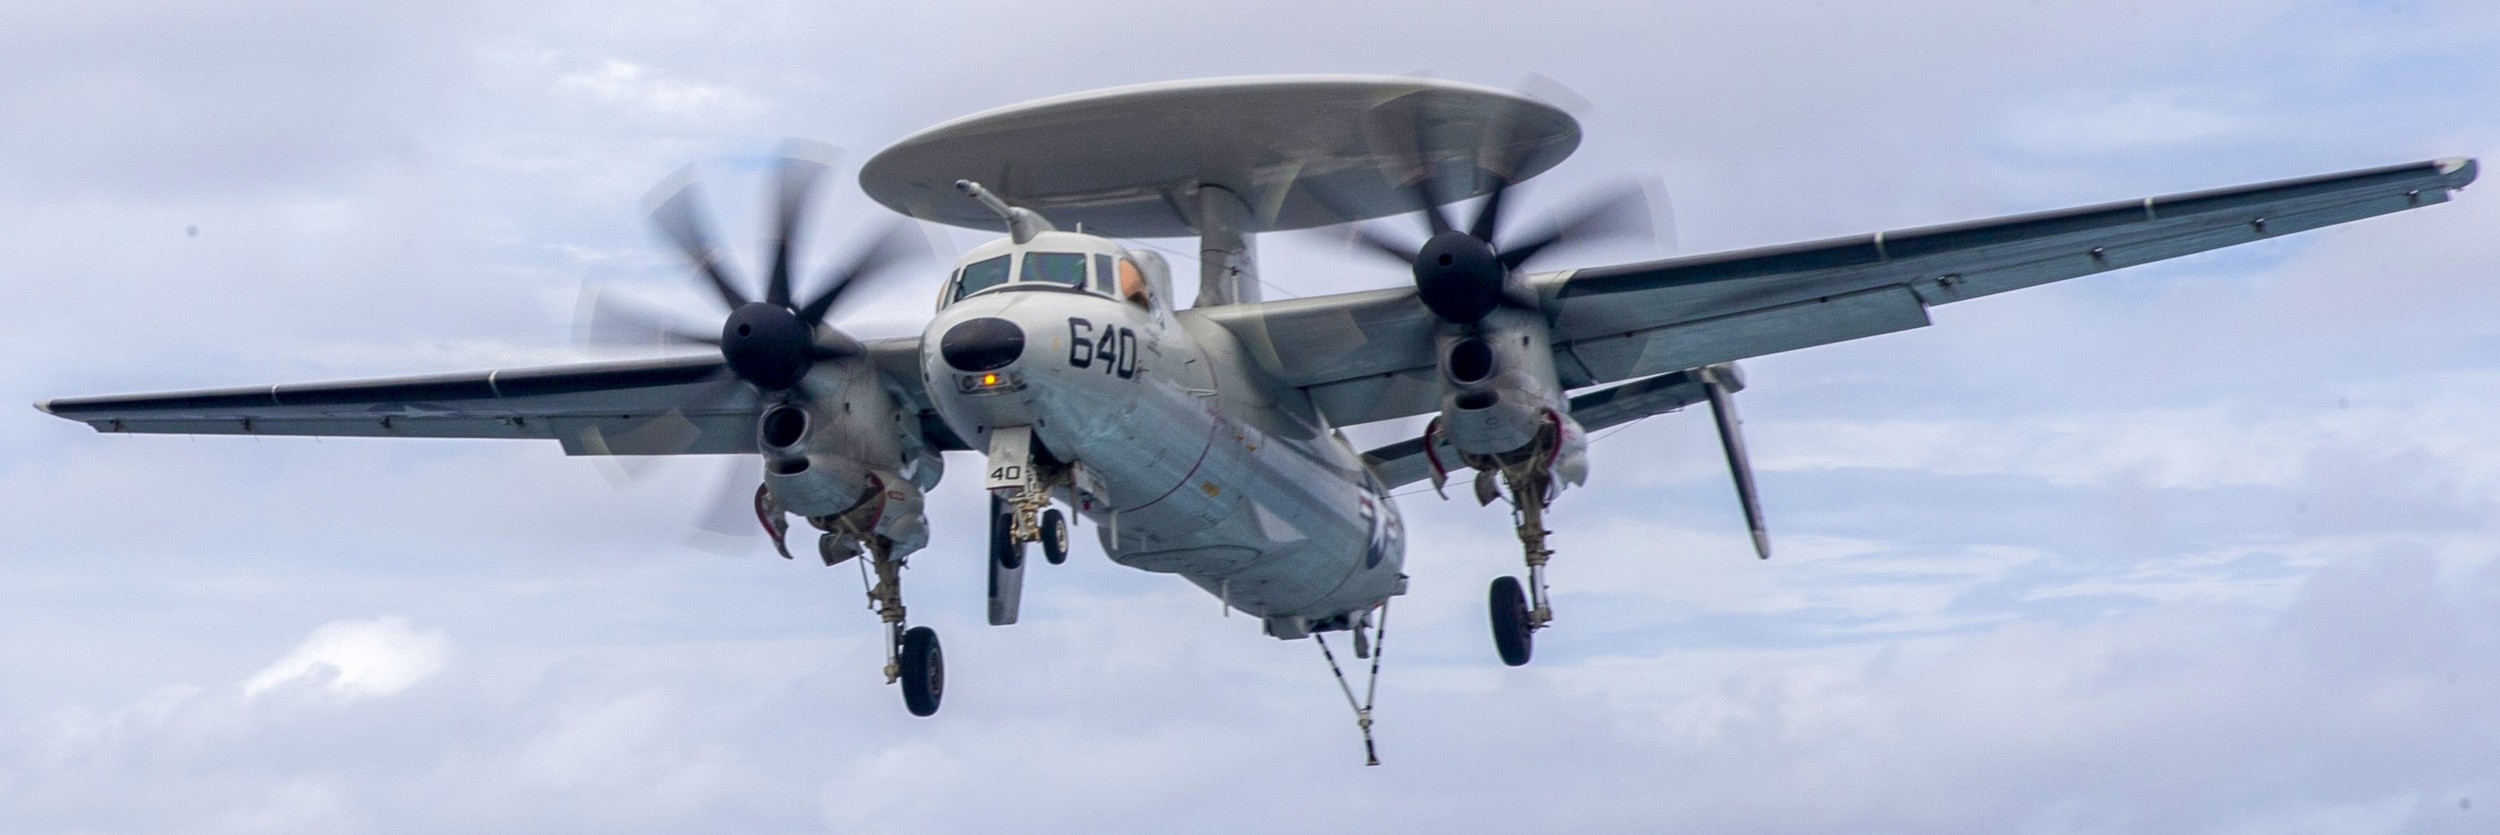 vaw-120 greyhawks airborne command control squadron e-2d advanced hawkeye replacement uss gerald r. ford cvn-78 25